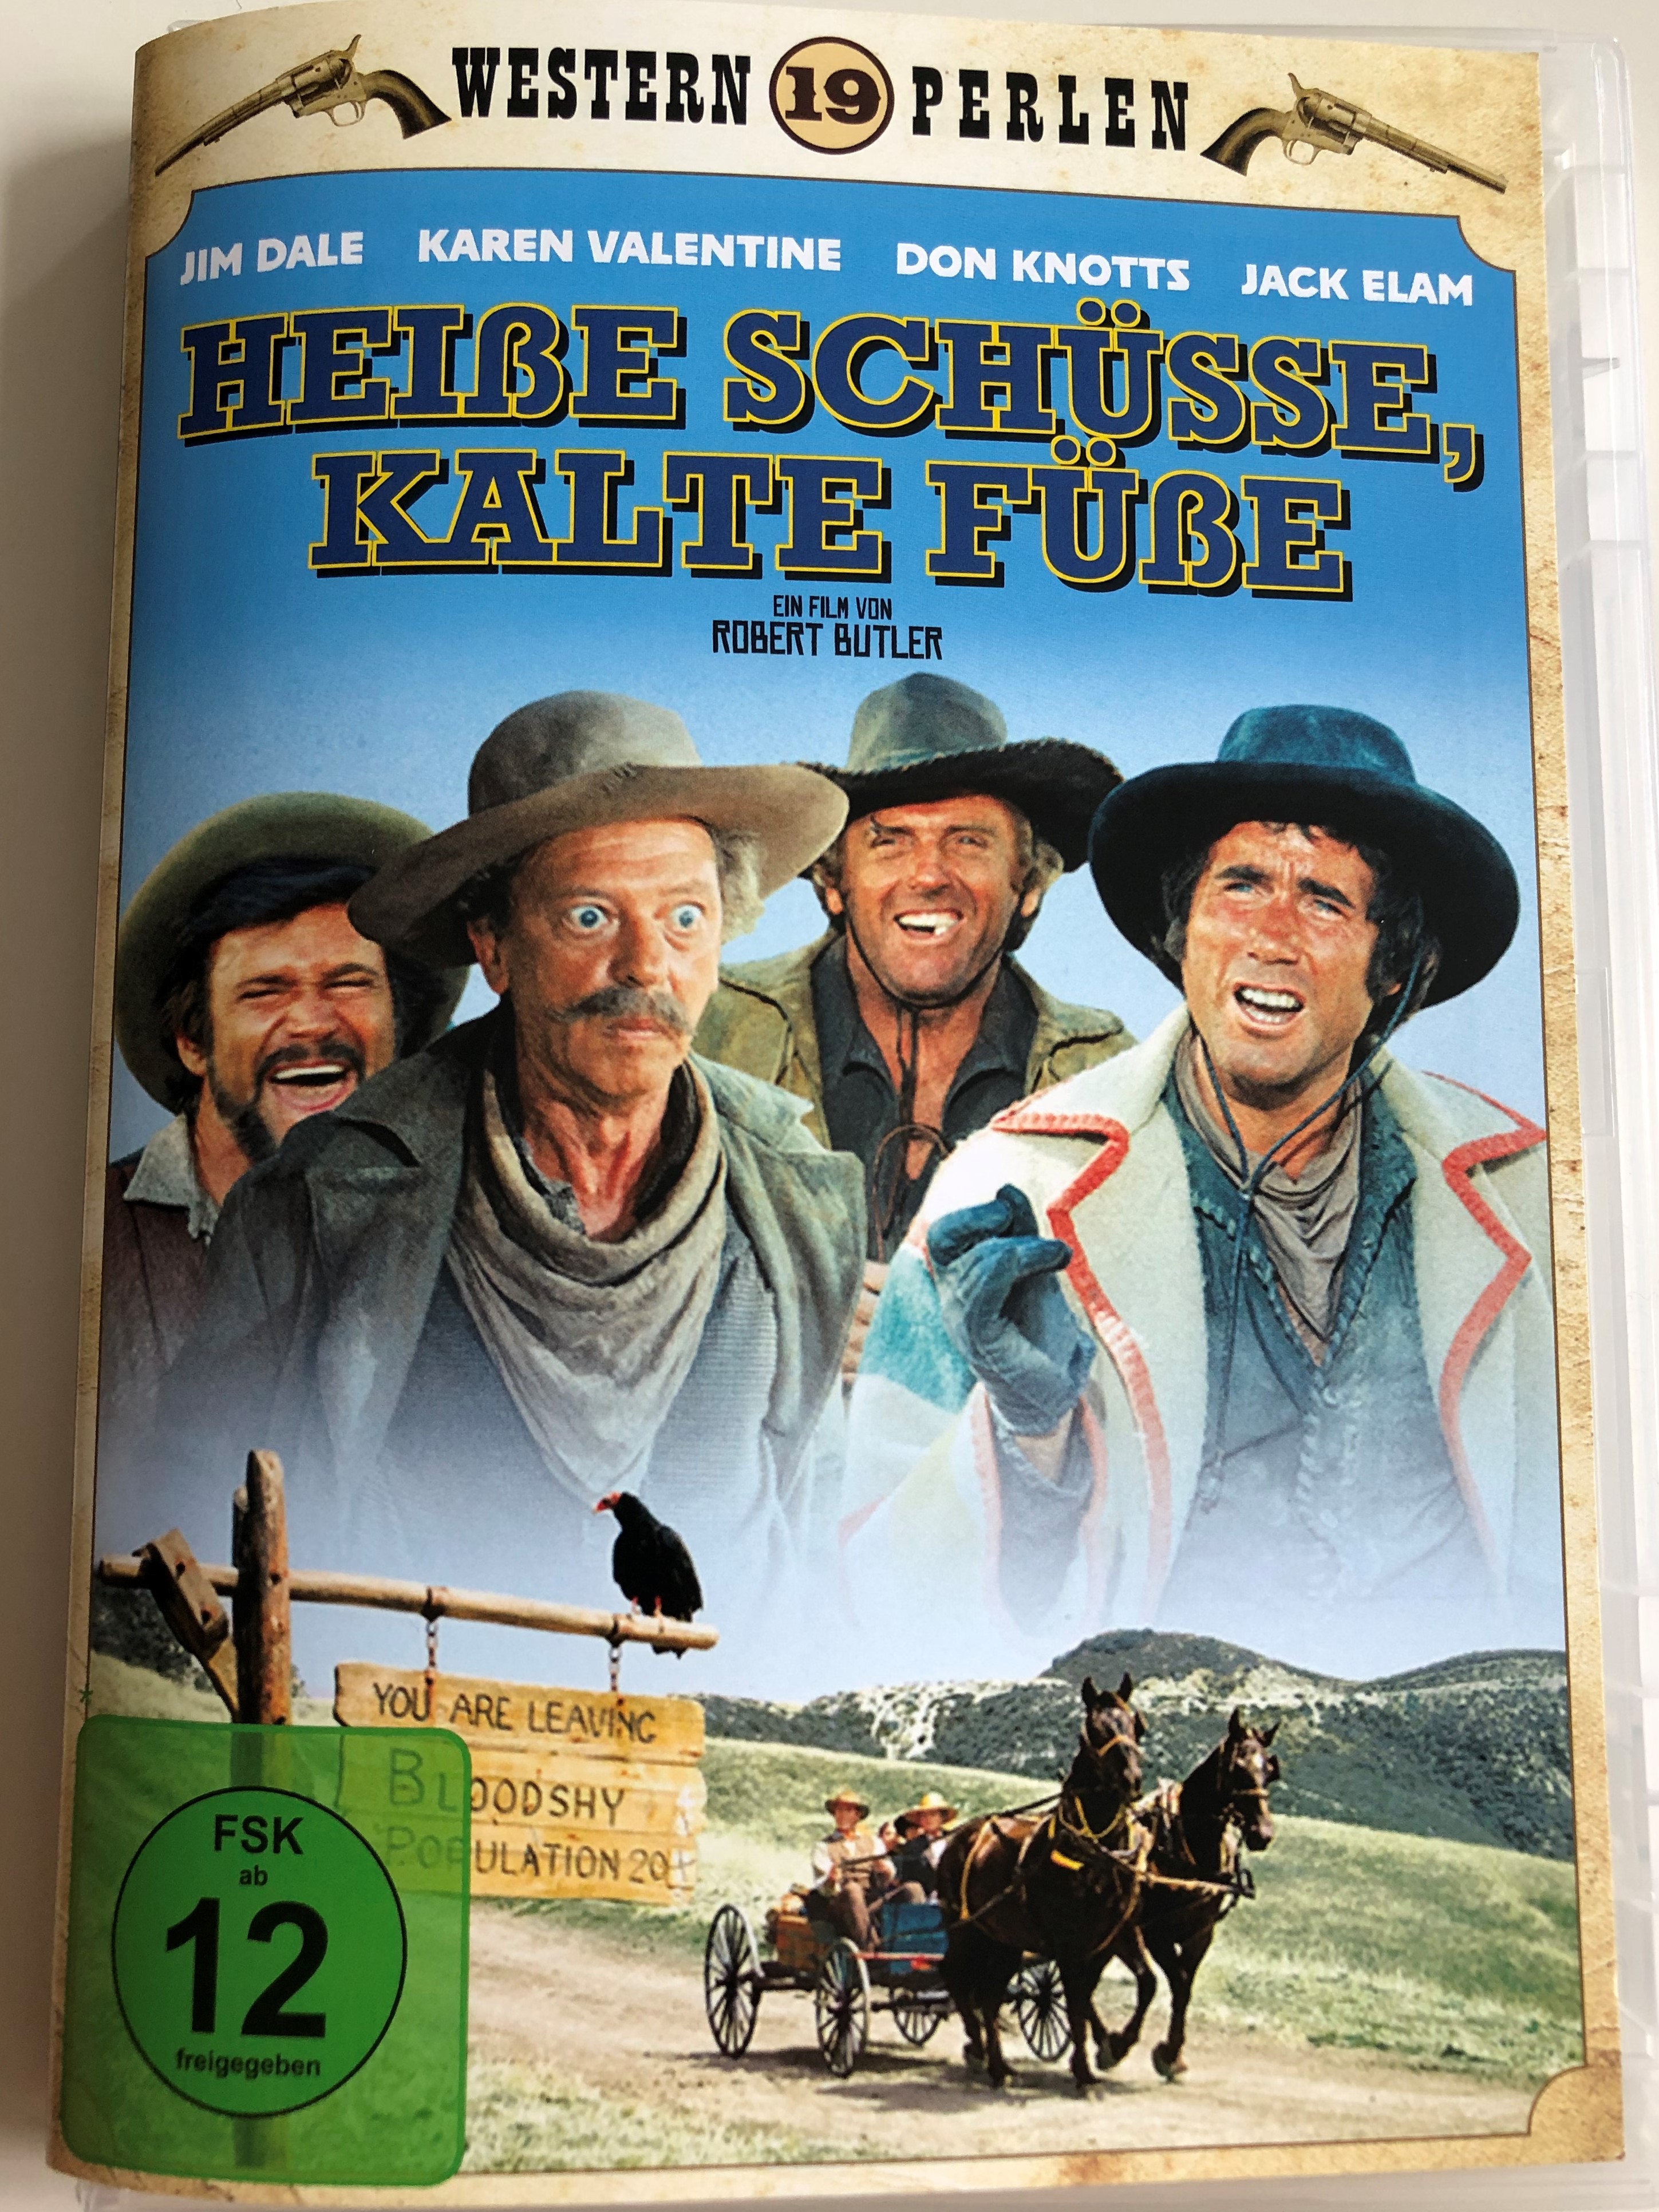 hot-lead-and-cold-feet-dvd-1978-hei-e-sch-sse-kalte-f-e-directed-by-robert-butler-starring-jim-dale-karen-valentine-don-knotts-jack-elam-western-19-perlen-1-.jpg